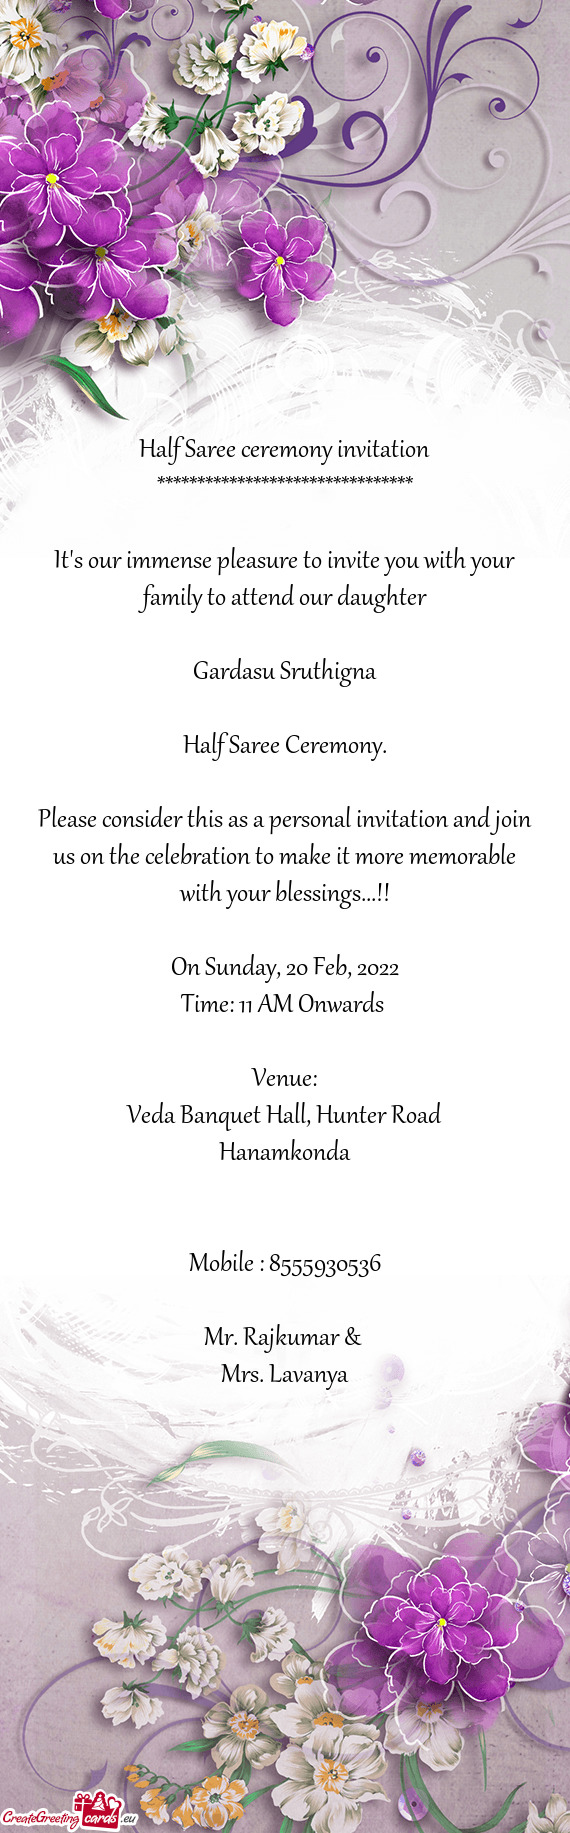 Veda Banquet Hall, Hunter Road